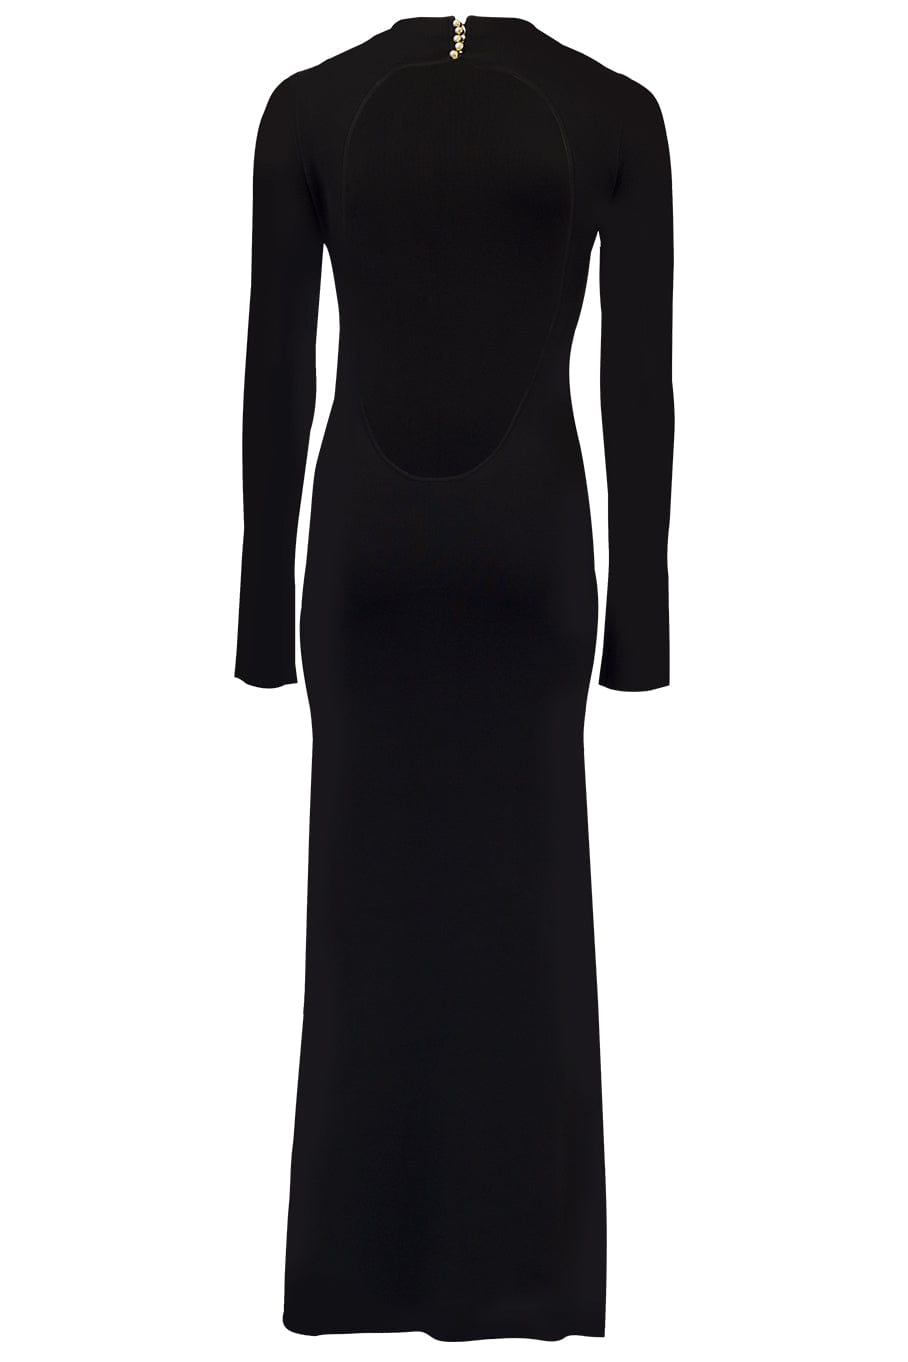 GALVAN LONDON-Athena Pearl Dress-BLACK